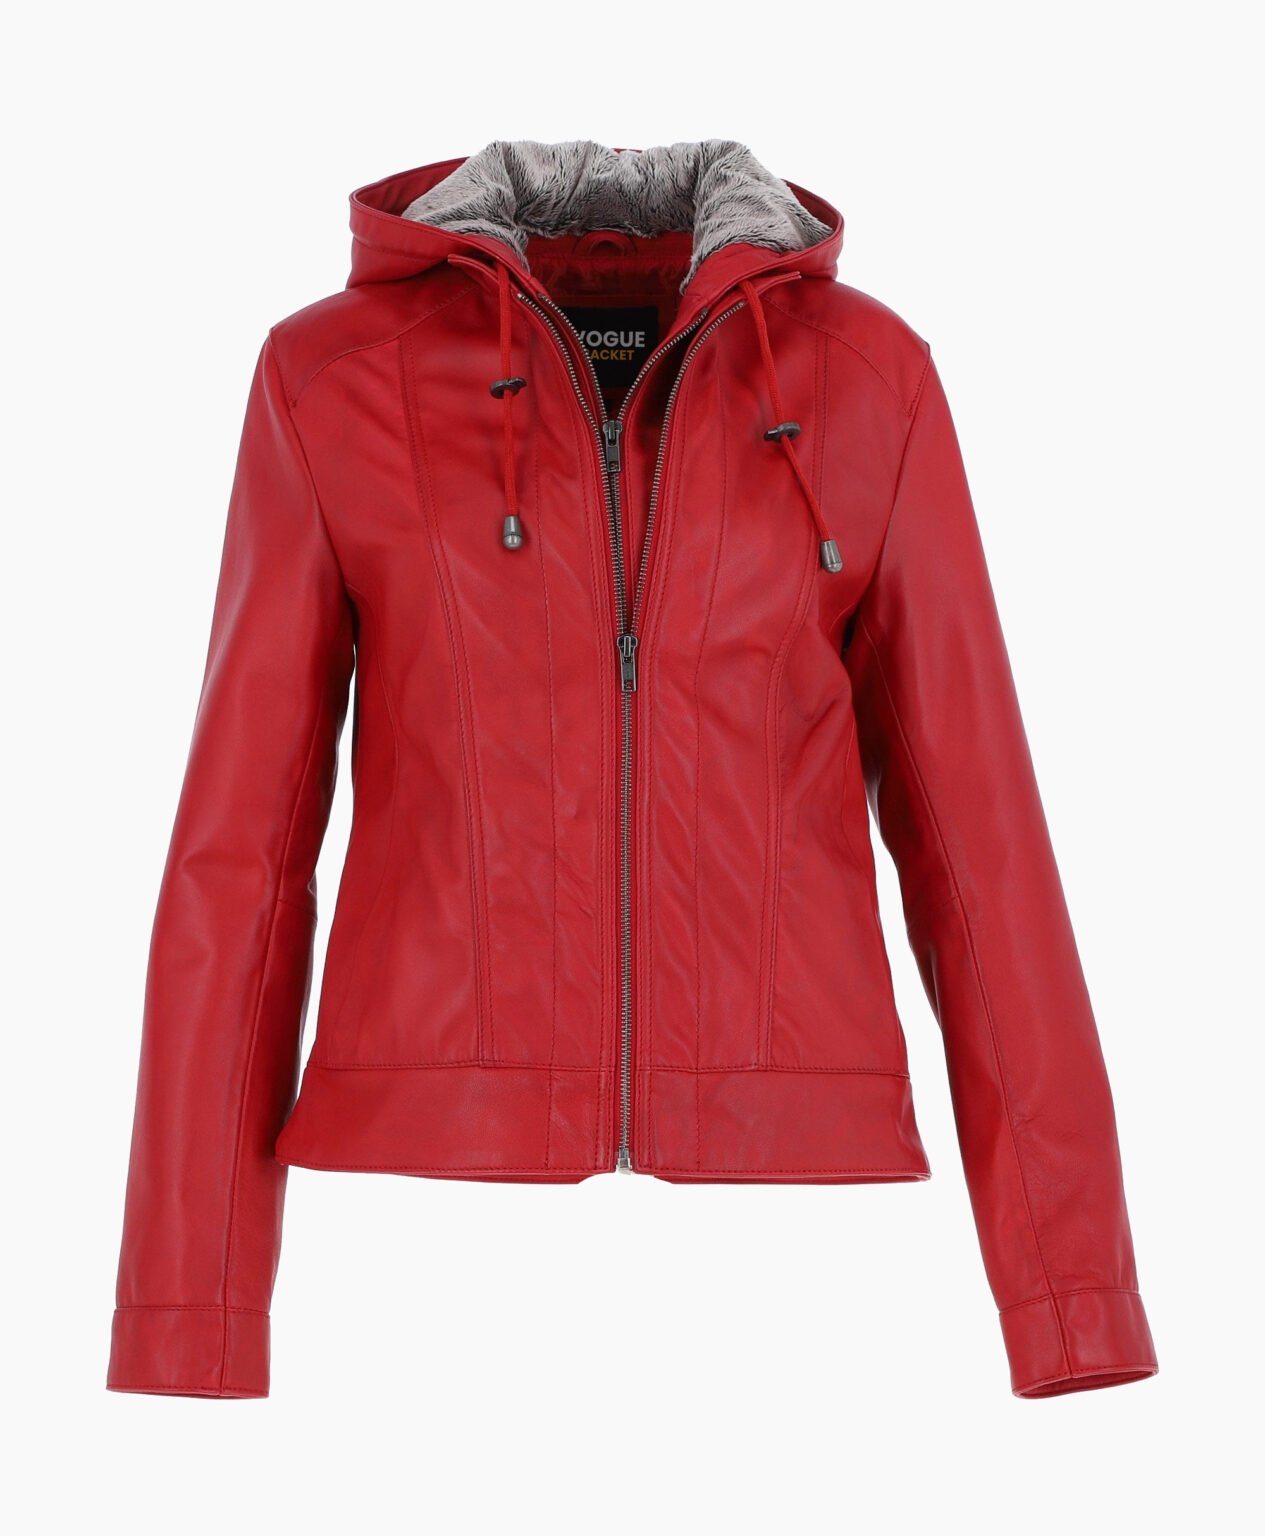 vogue-jacket-leather-hooded-jacket-red-sarasota-image200